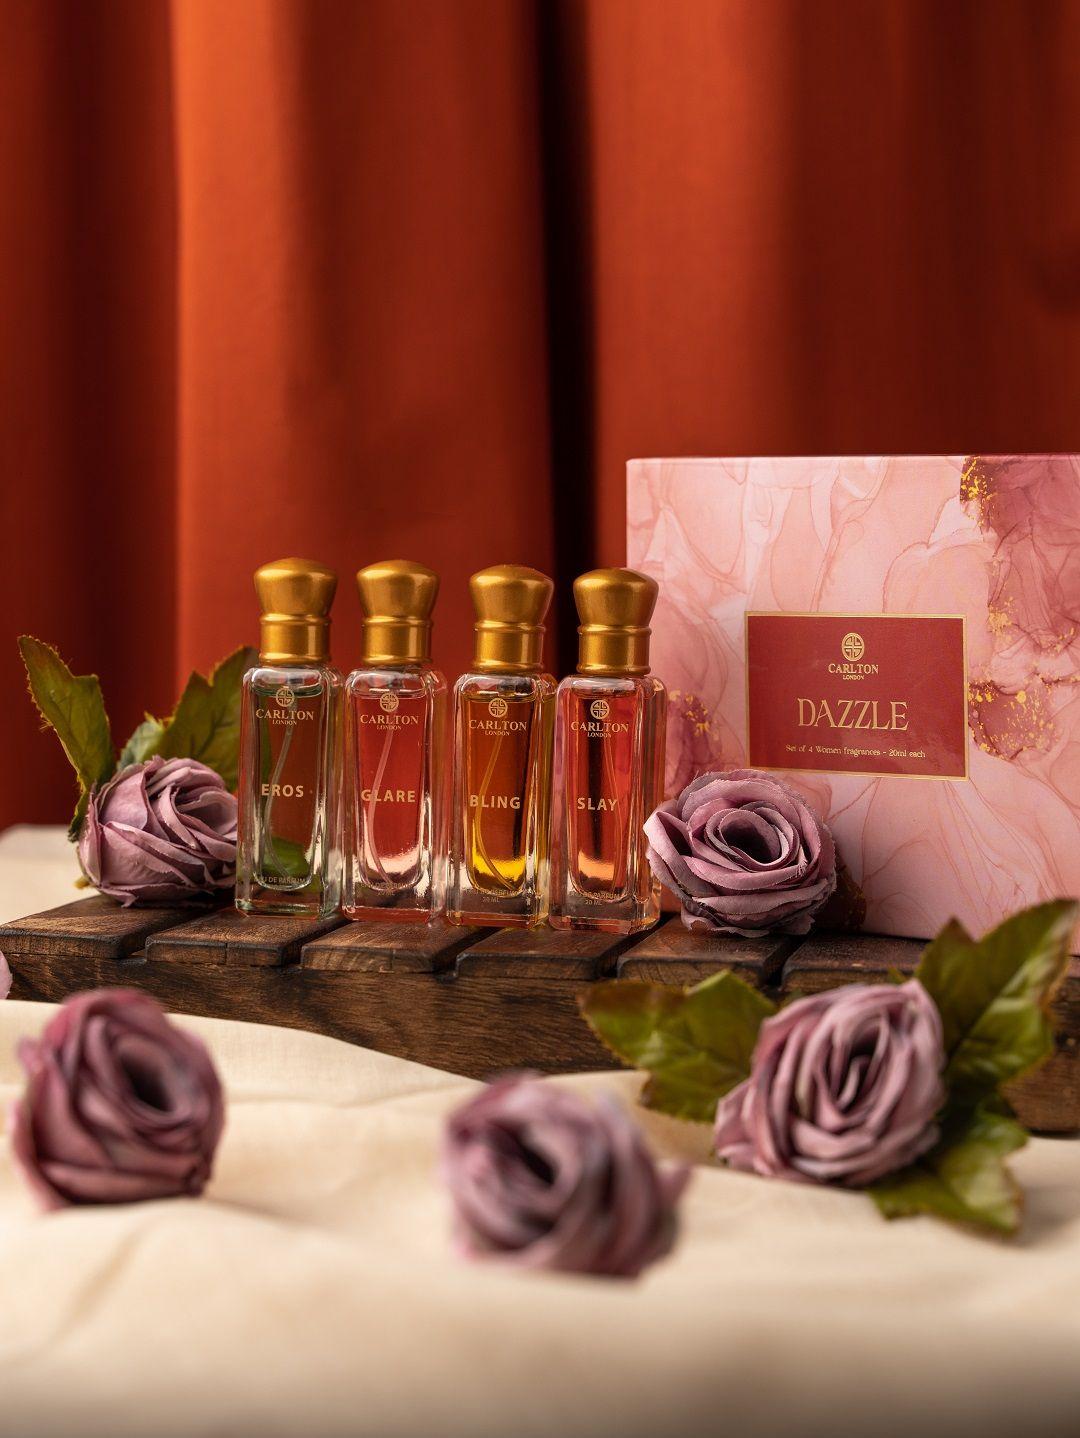 carlton london women dazzle edp fragrance gift set